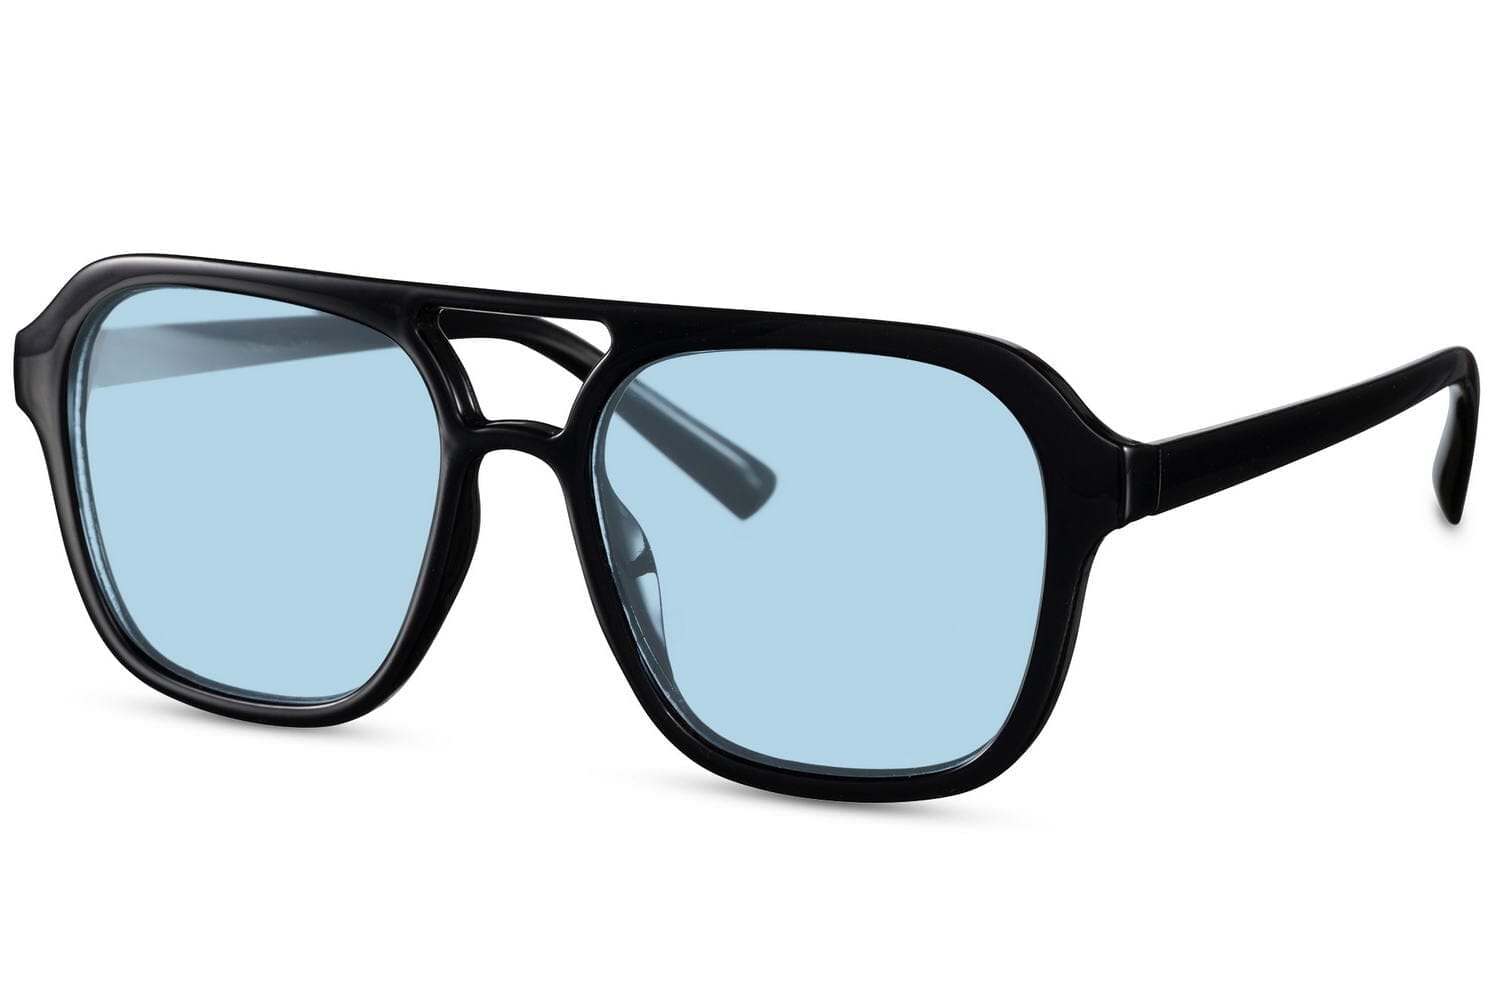 Blue aviator sunglasses. UV400 protected.